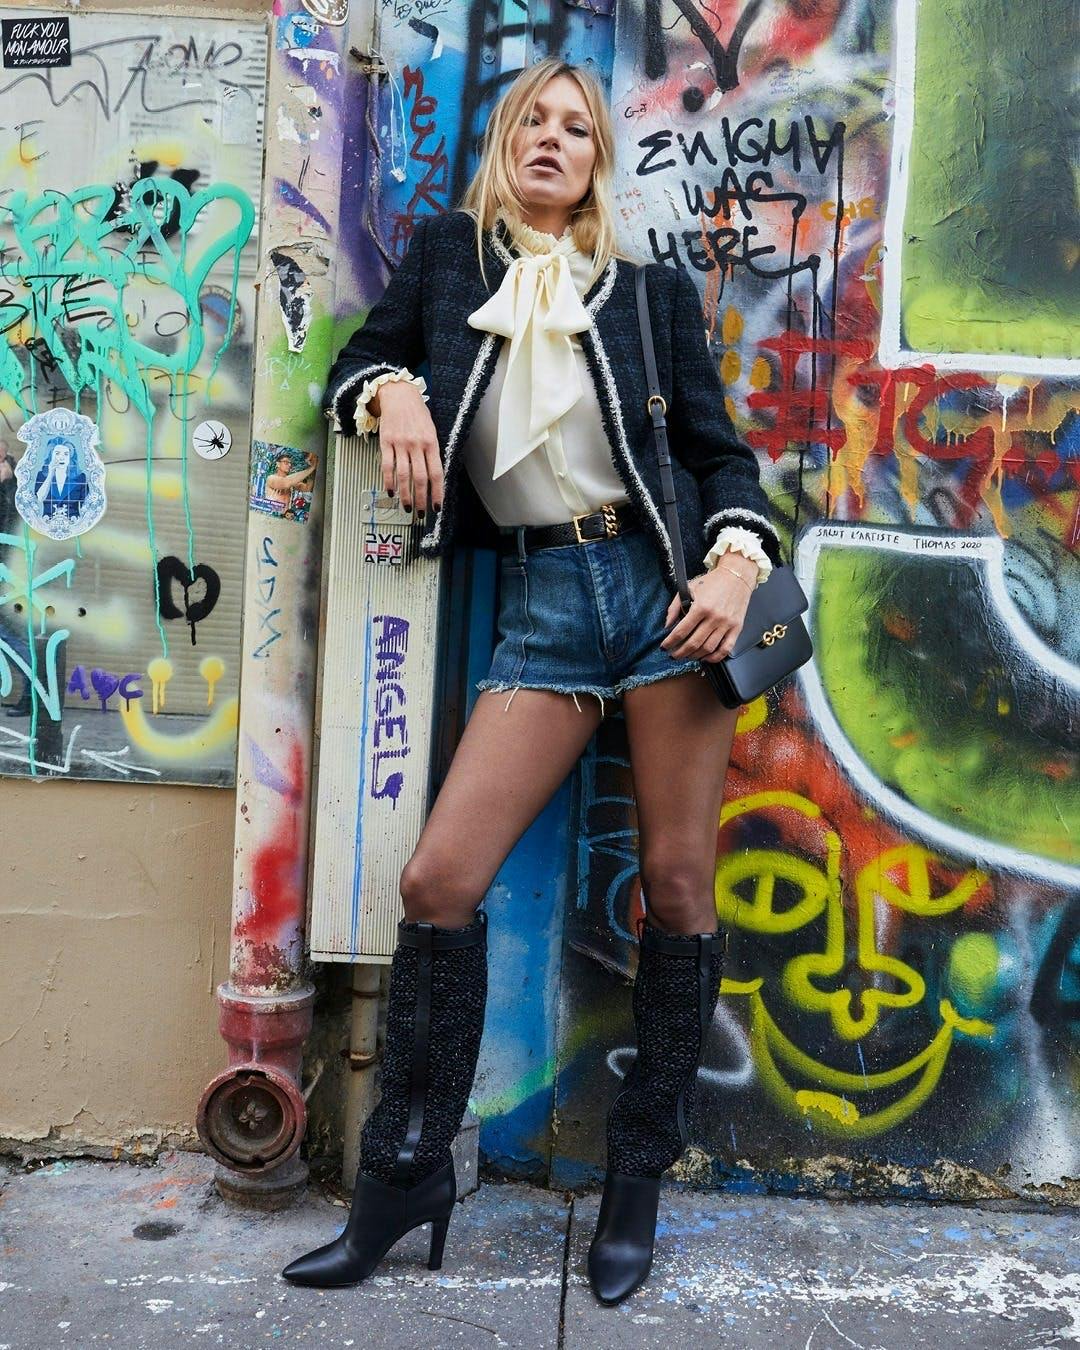 clothing apparel person graffiti art wall shorts footwear mural painting